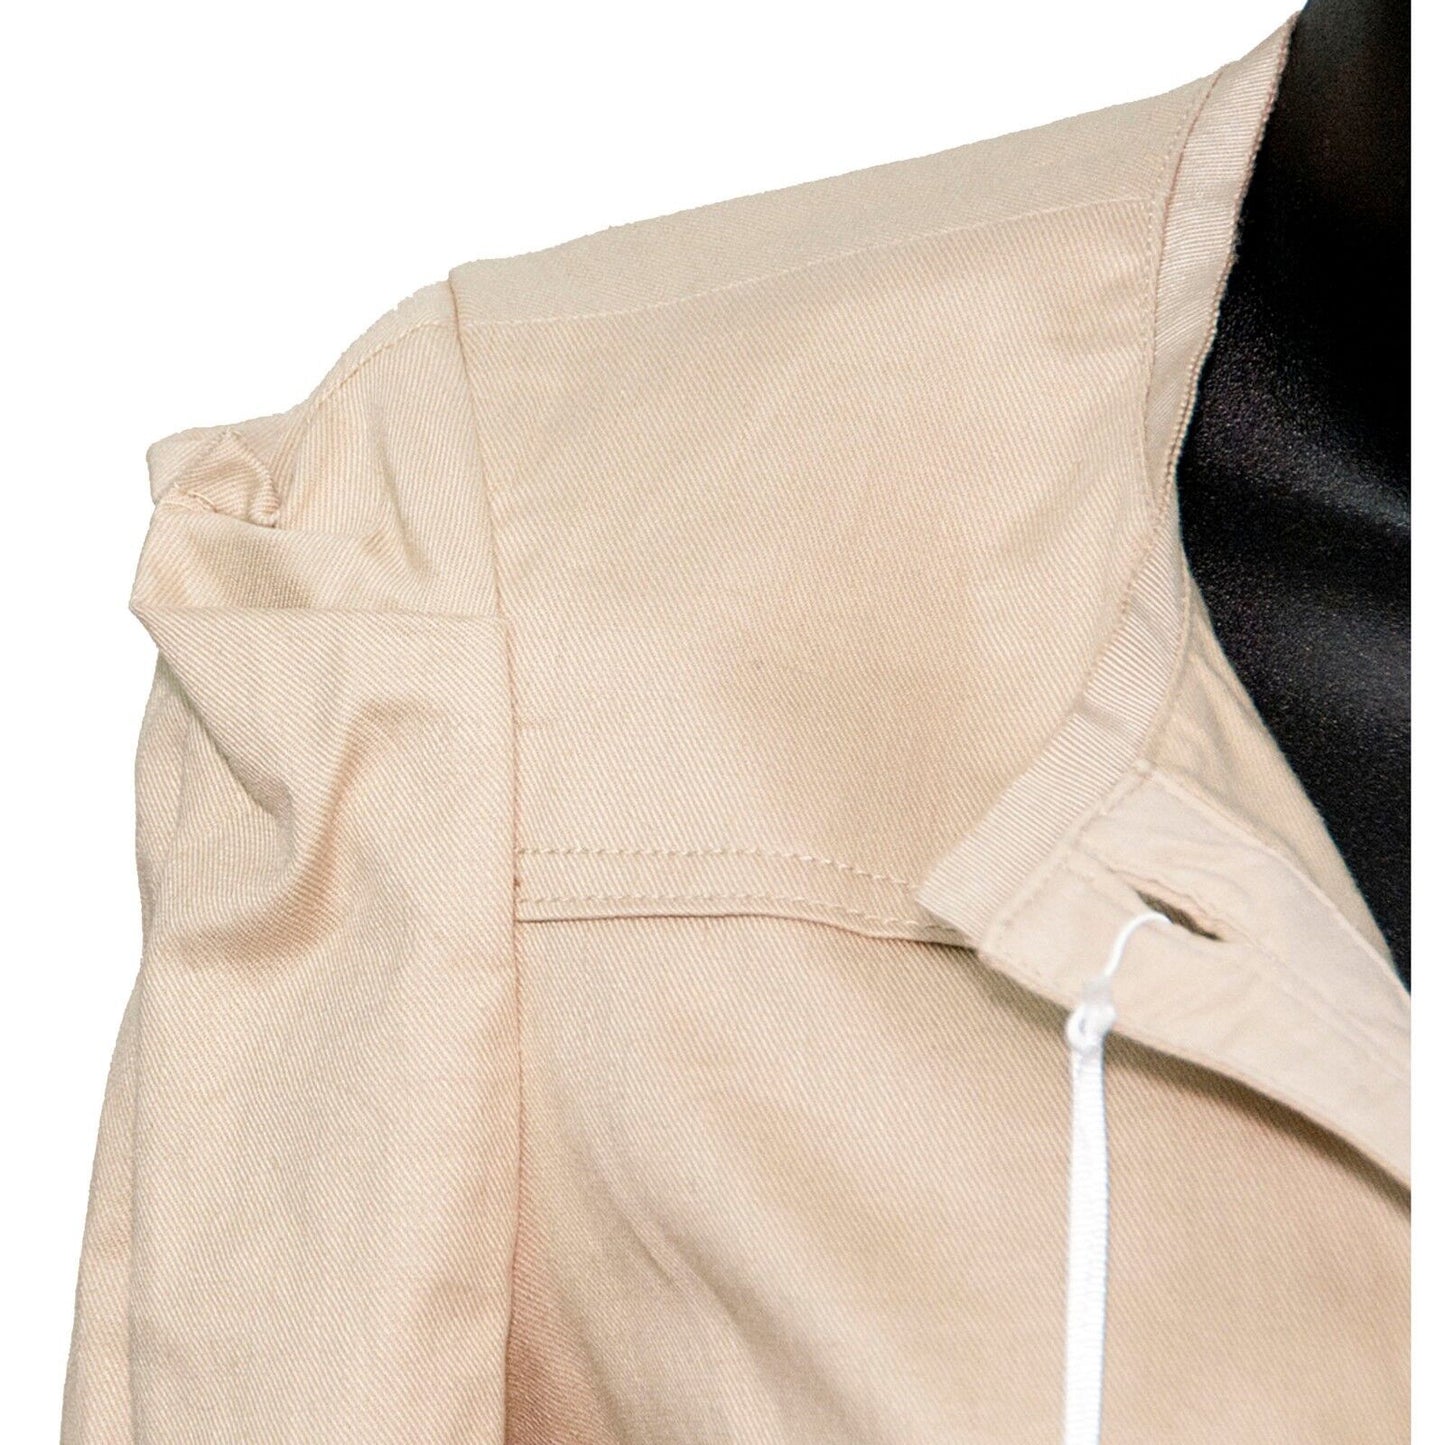 2b.Rych Walnut Spring Cotton Linen Military Safari Jacket Size 8 NWT